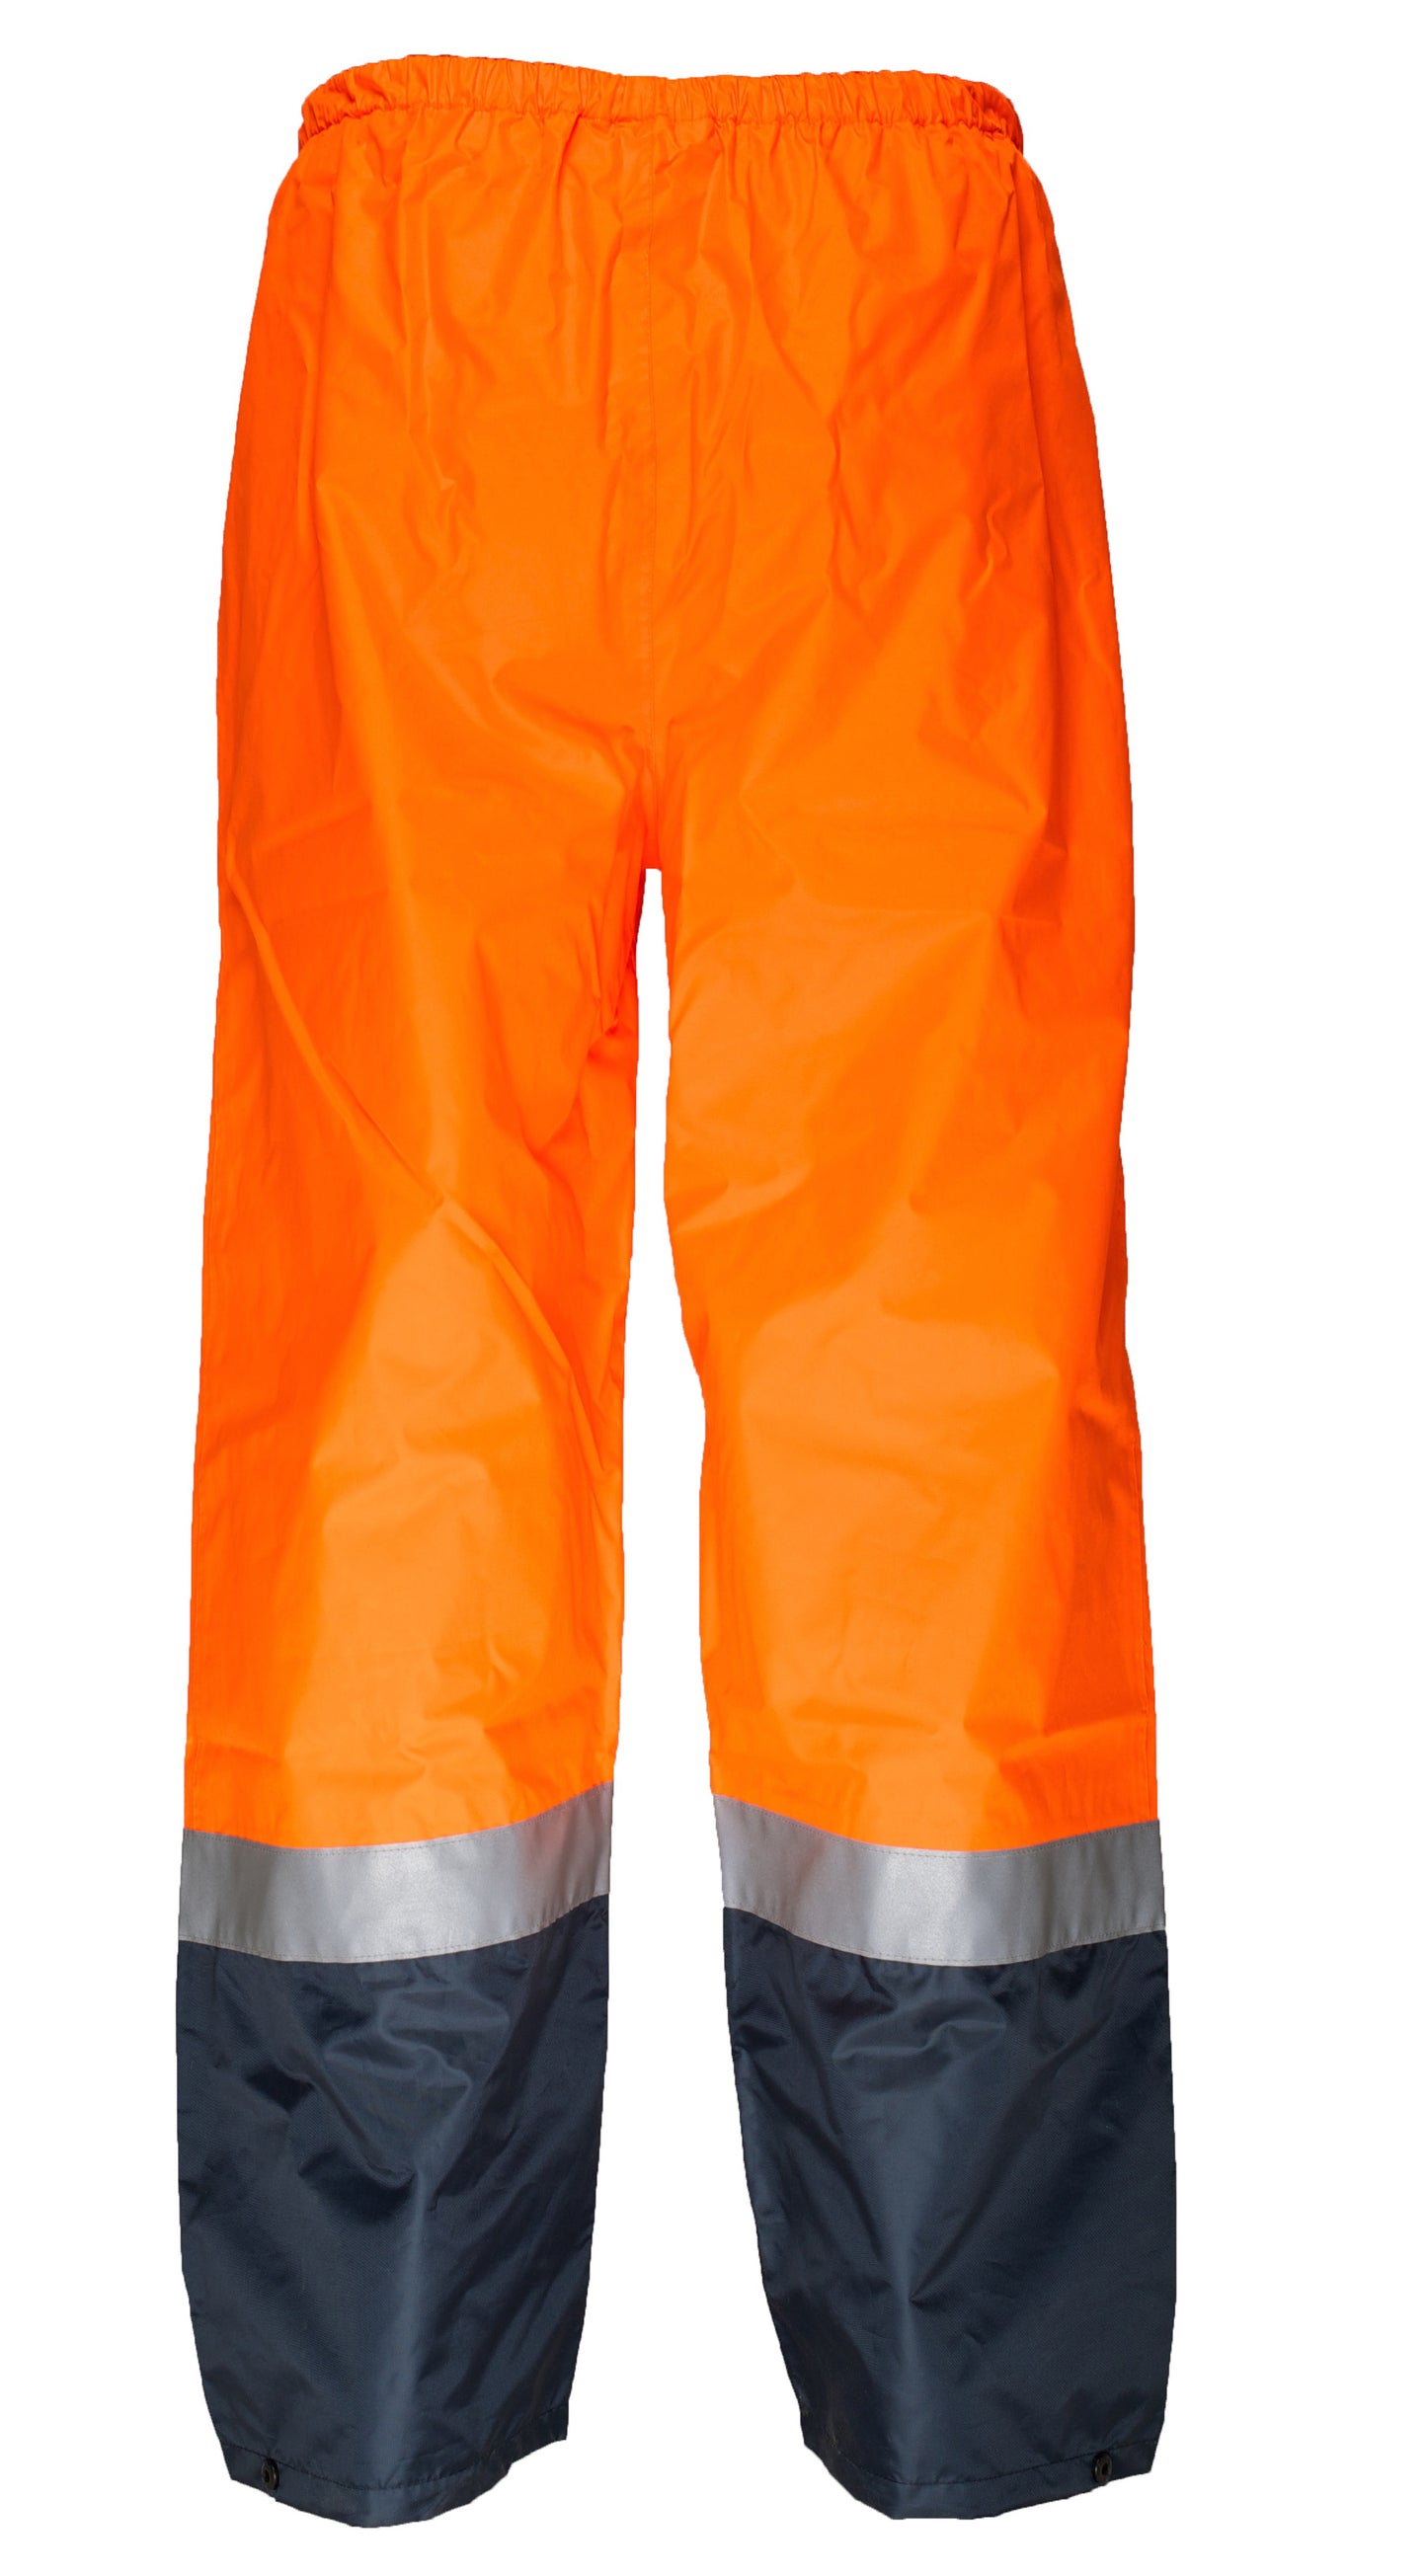 Orange Wet Weather Pull-On Pants D/N - Back